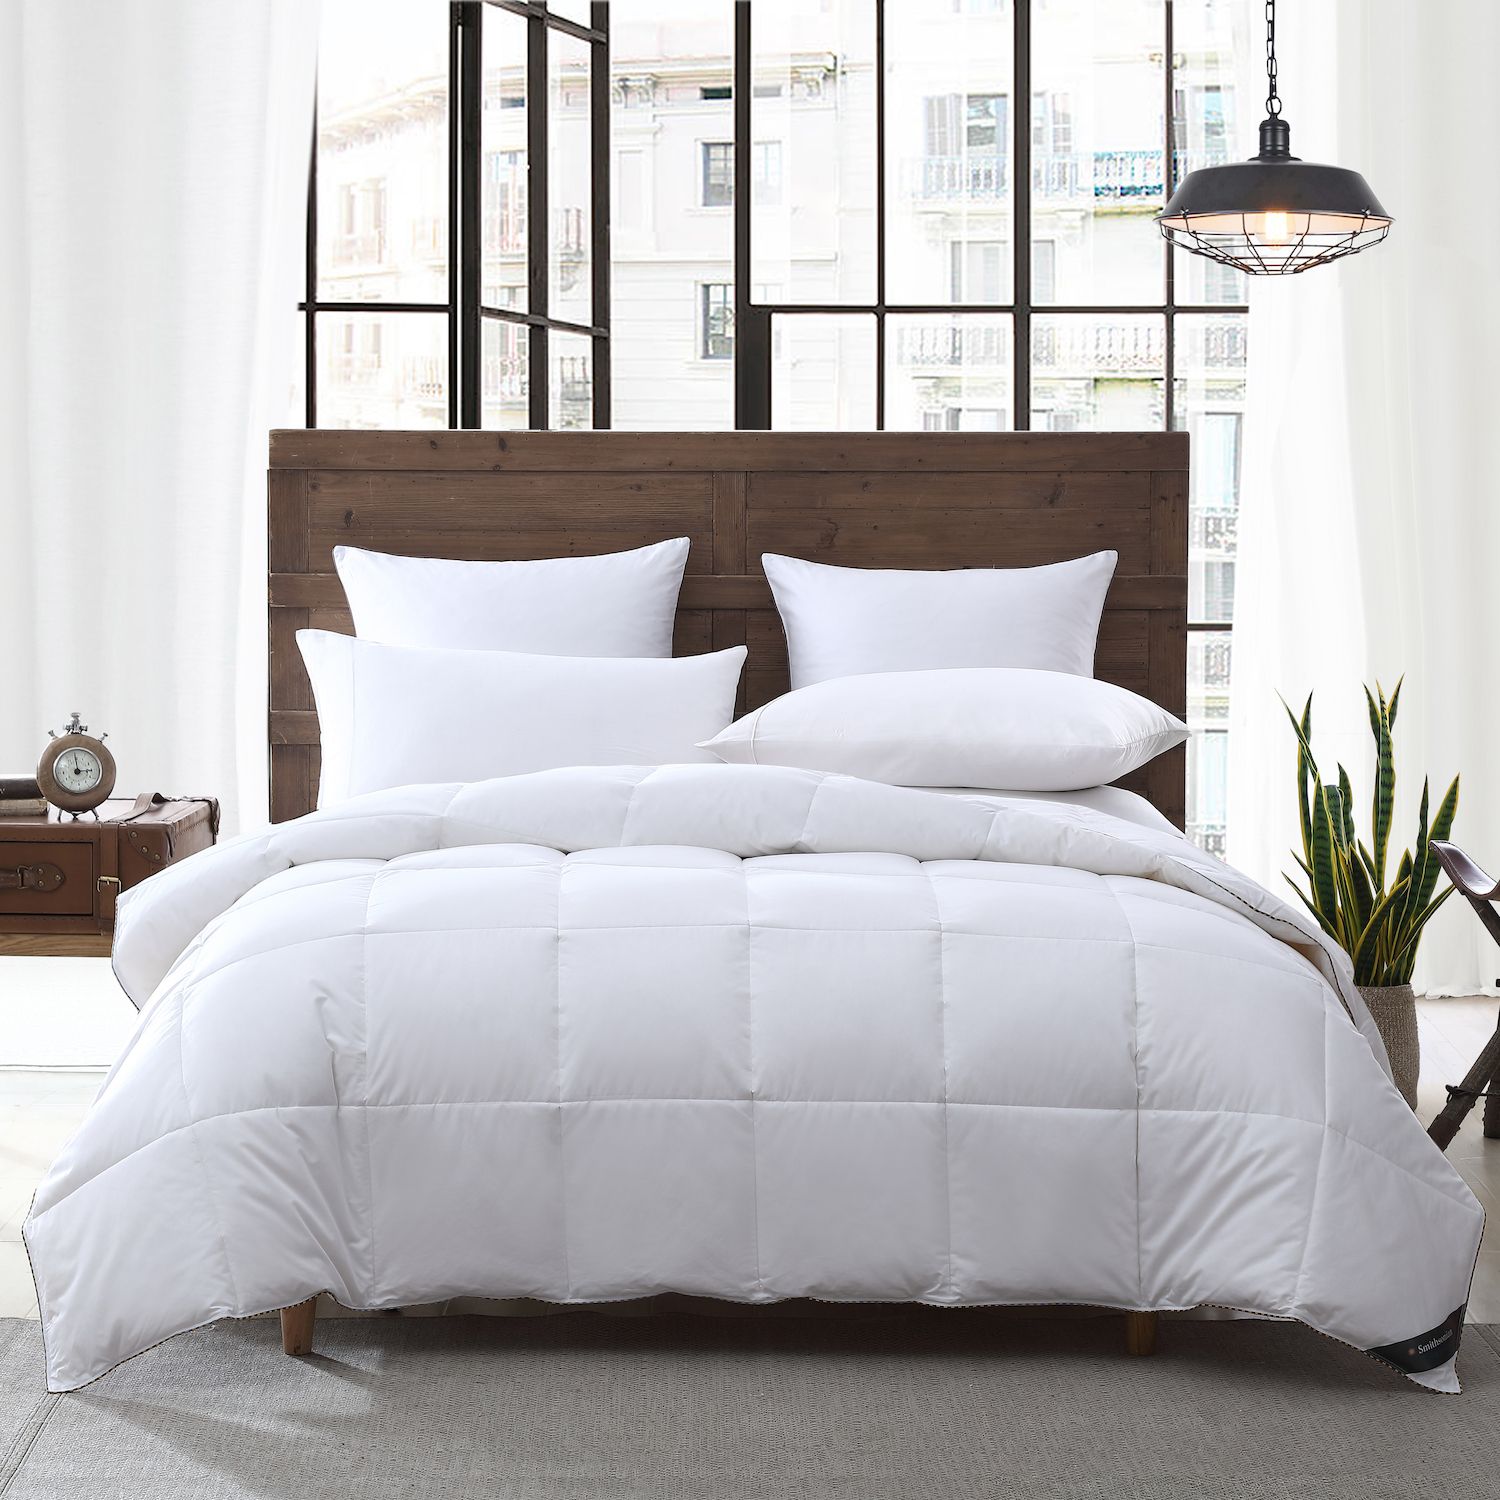 Comfort Classics 3M Thinsulate Down Alternative Comforter, Level 1 - King 